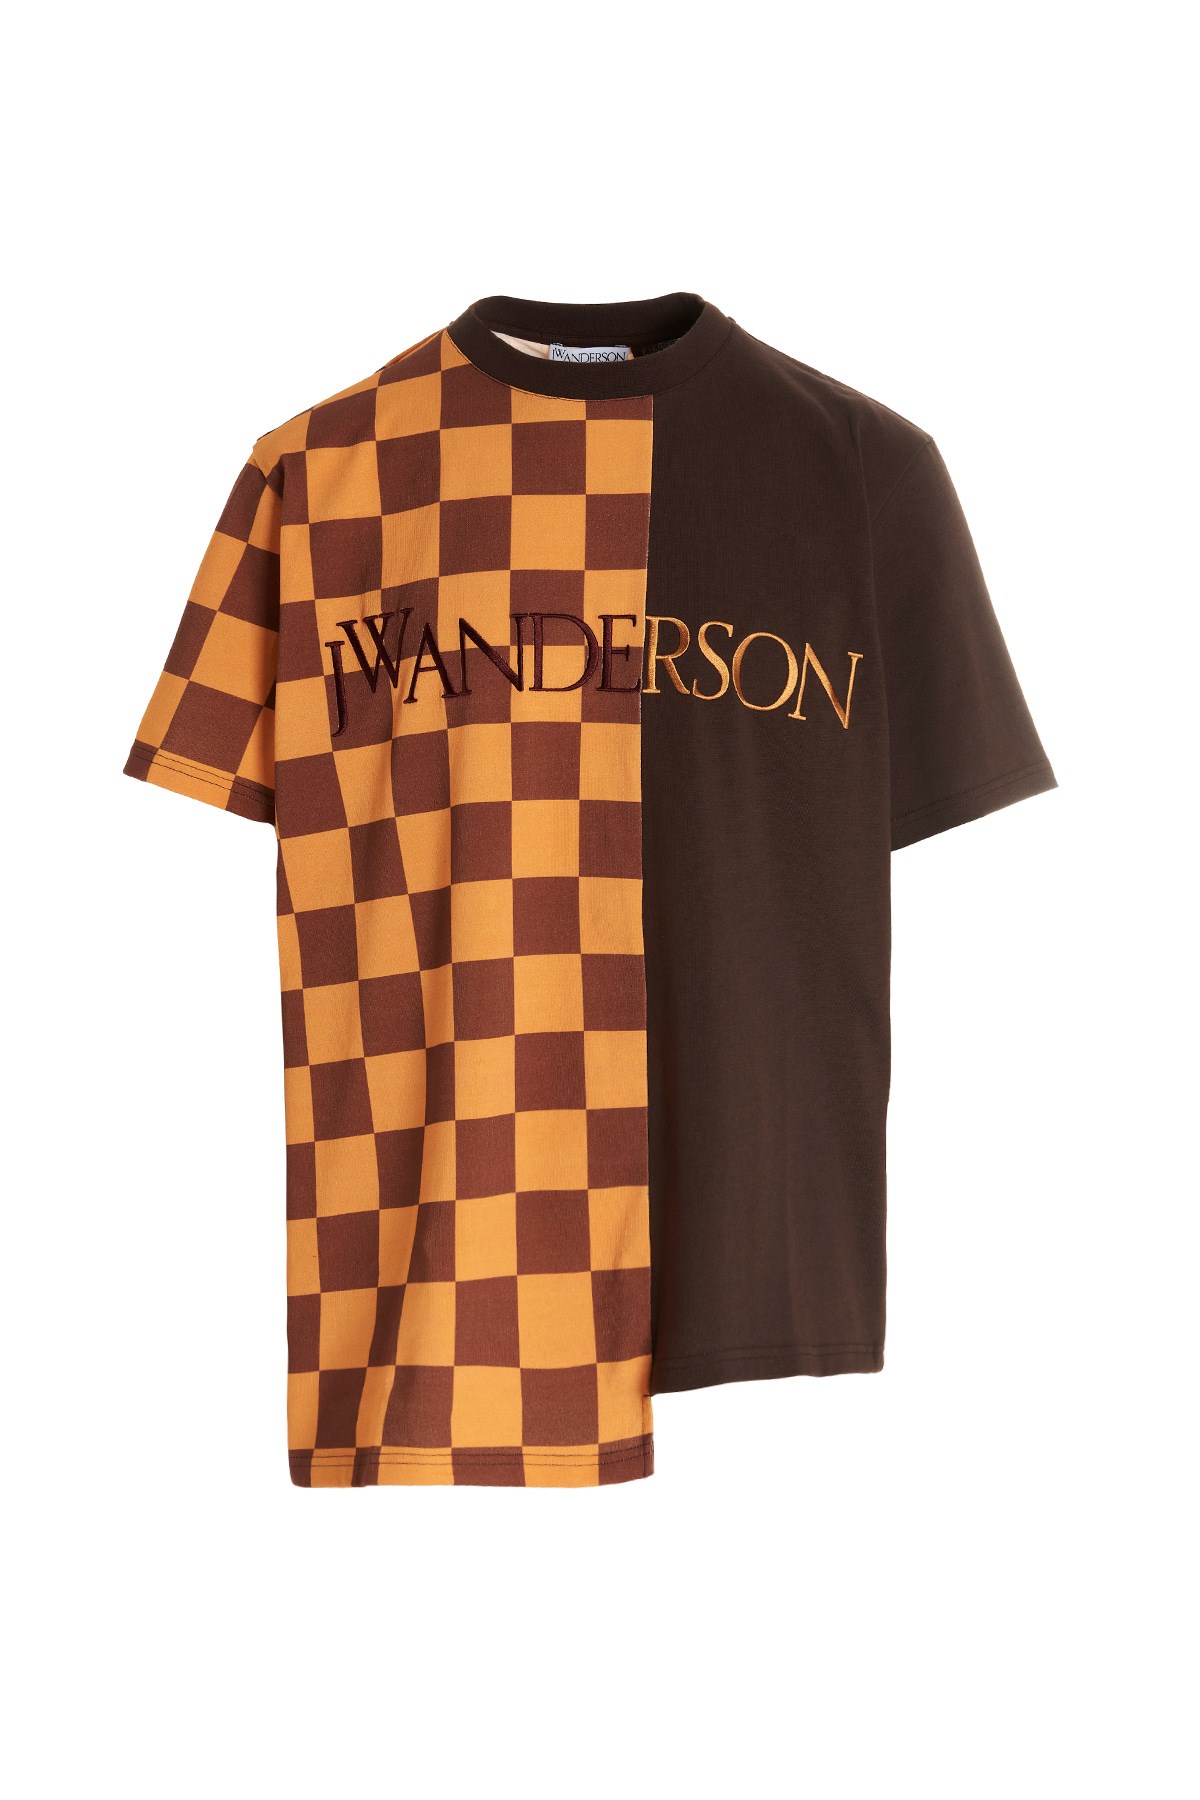 J.W.ANDERSON T-Shirt 'Checkwork Patchwork'